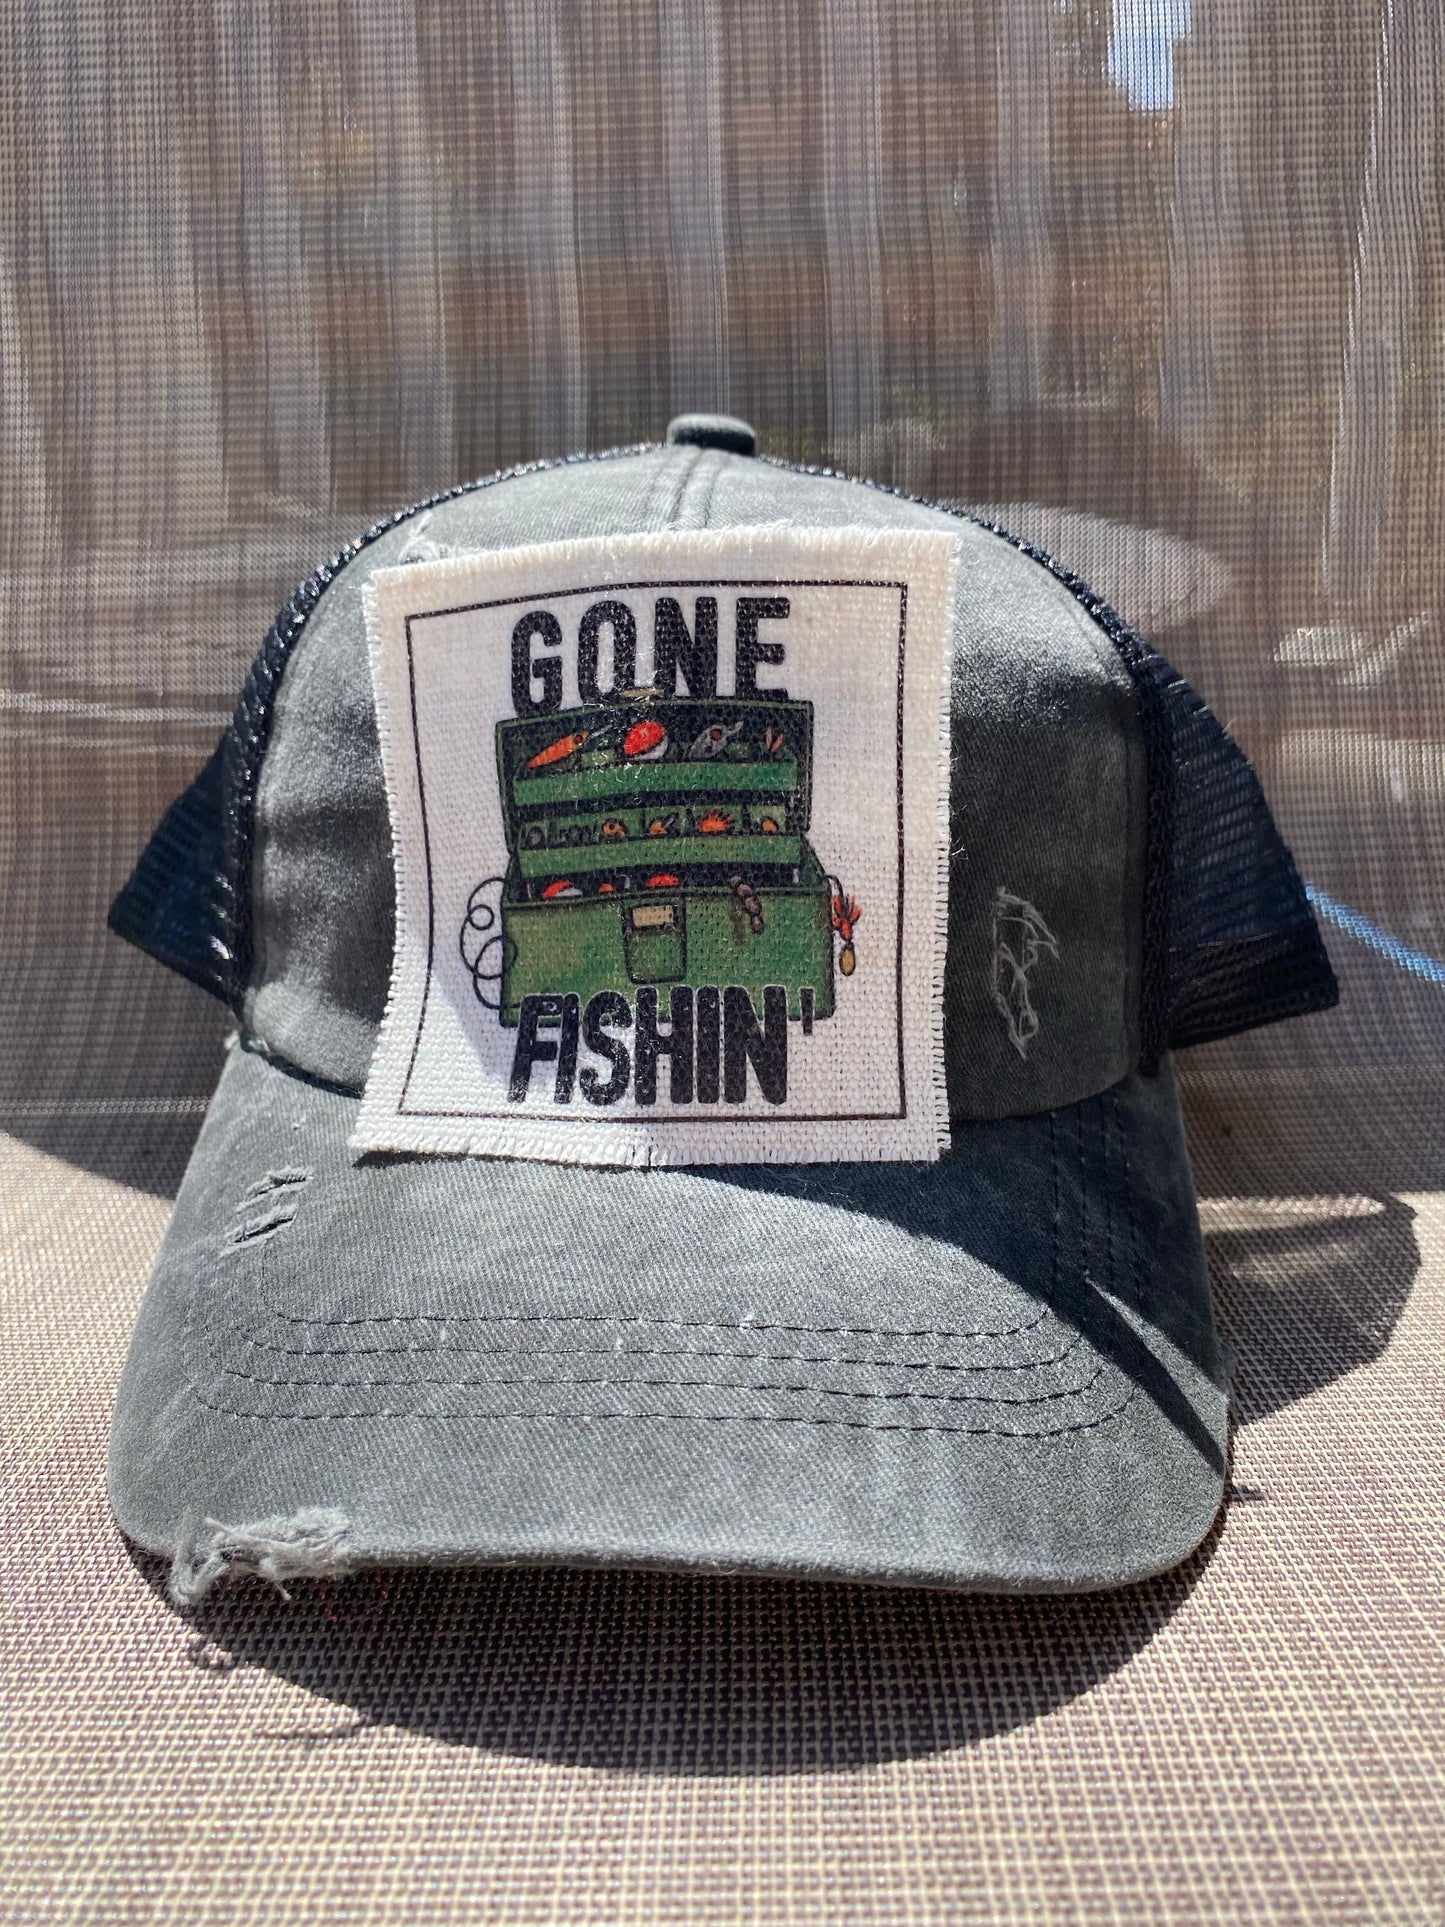 Gone Fishin' Hat Patch